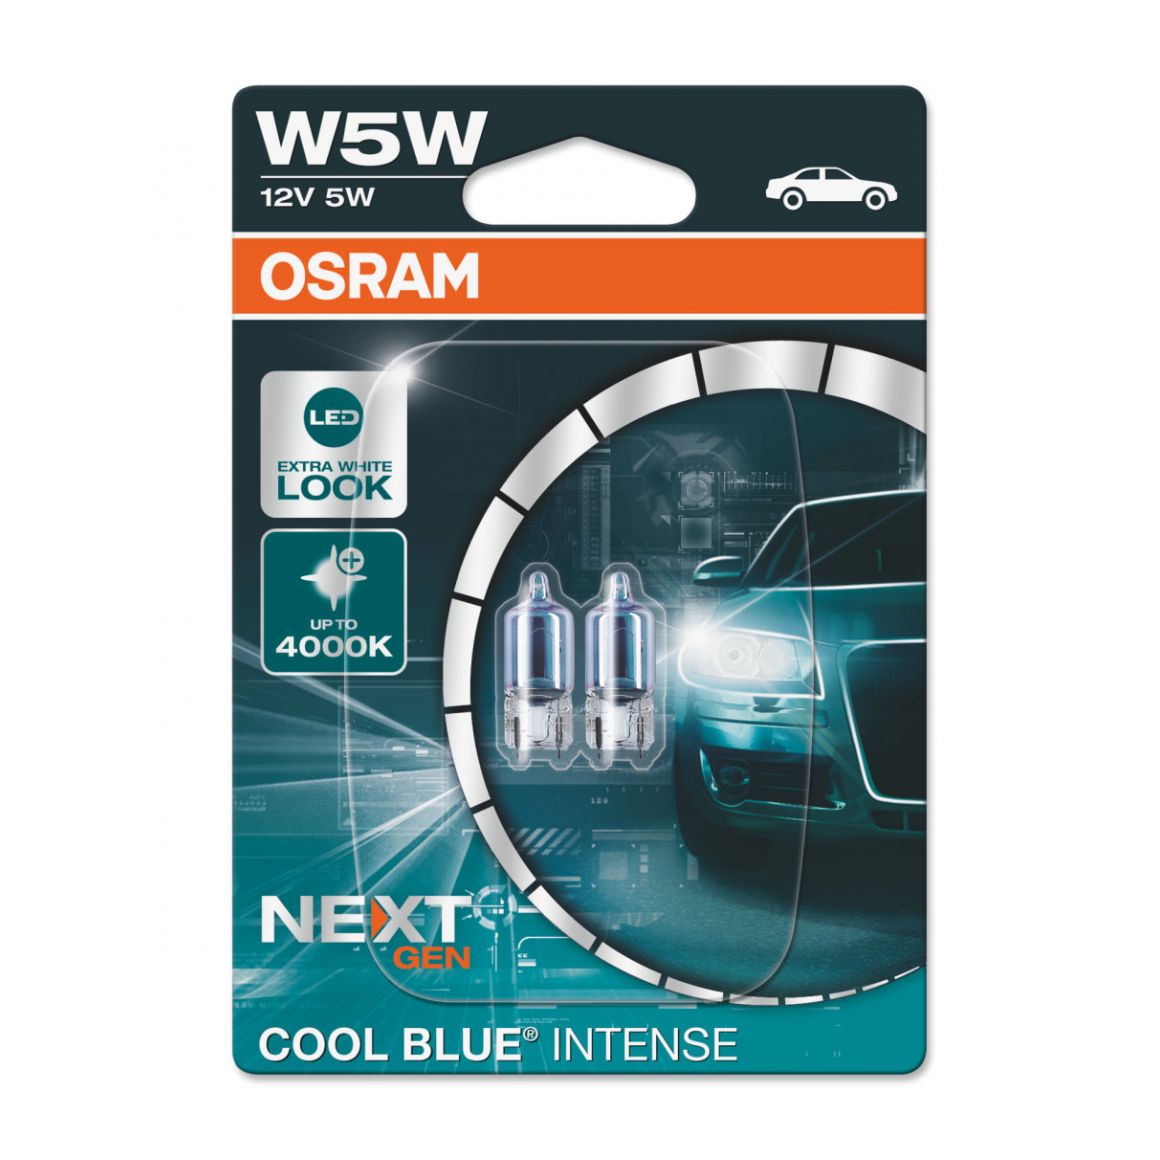 hole Skalk Ambiguity 2x W5W Cool Blue Intense Next Gen OSRAM 12V 5W - 4000K 2825CBN-02B - France- Xenon